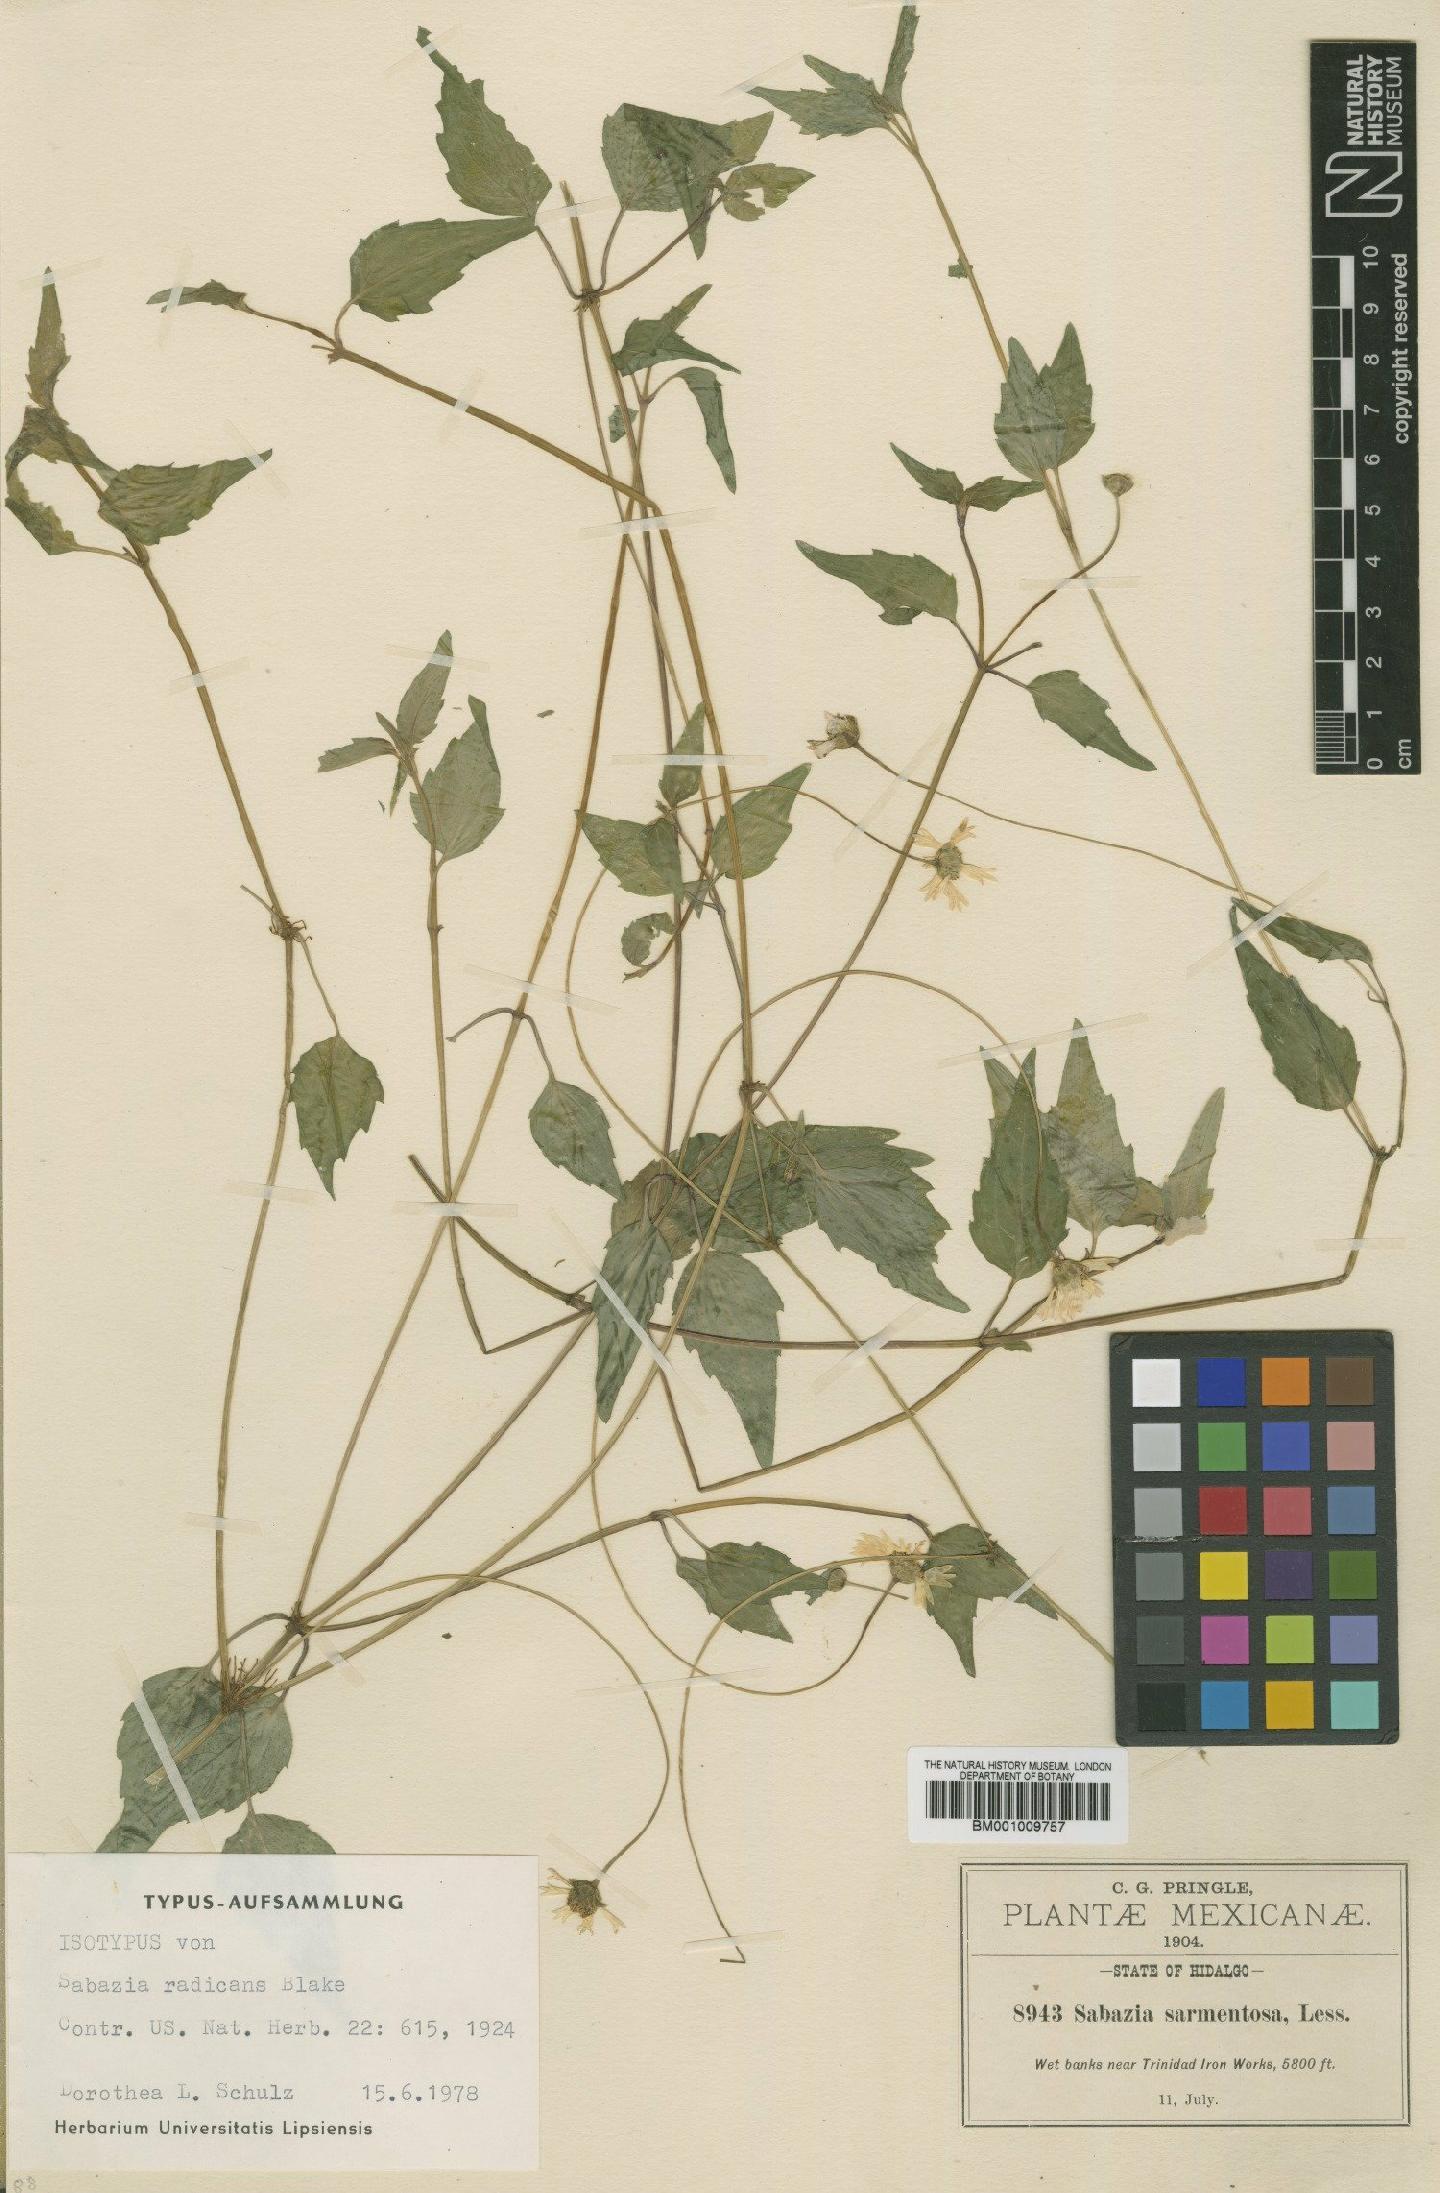 To NHMUK collection (Sabazia radicans S.F.Blake; Isotype; NHMUK:ecatalogue:621207)